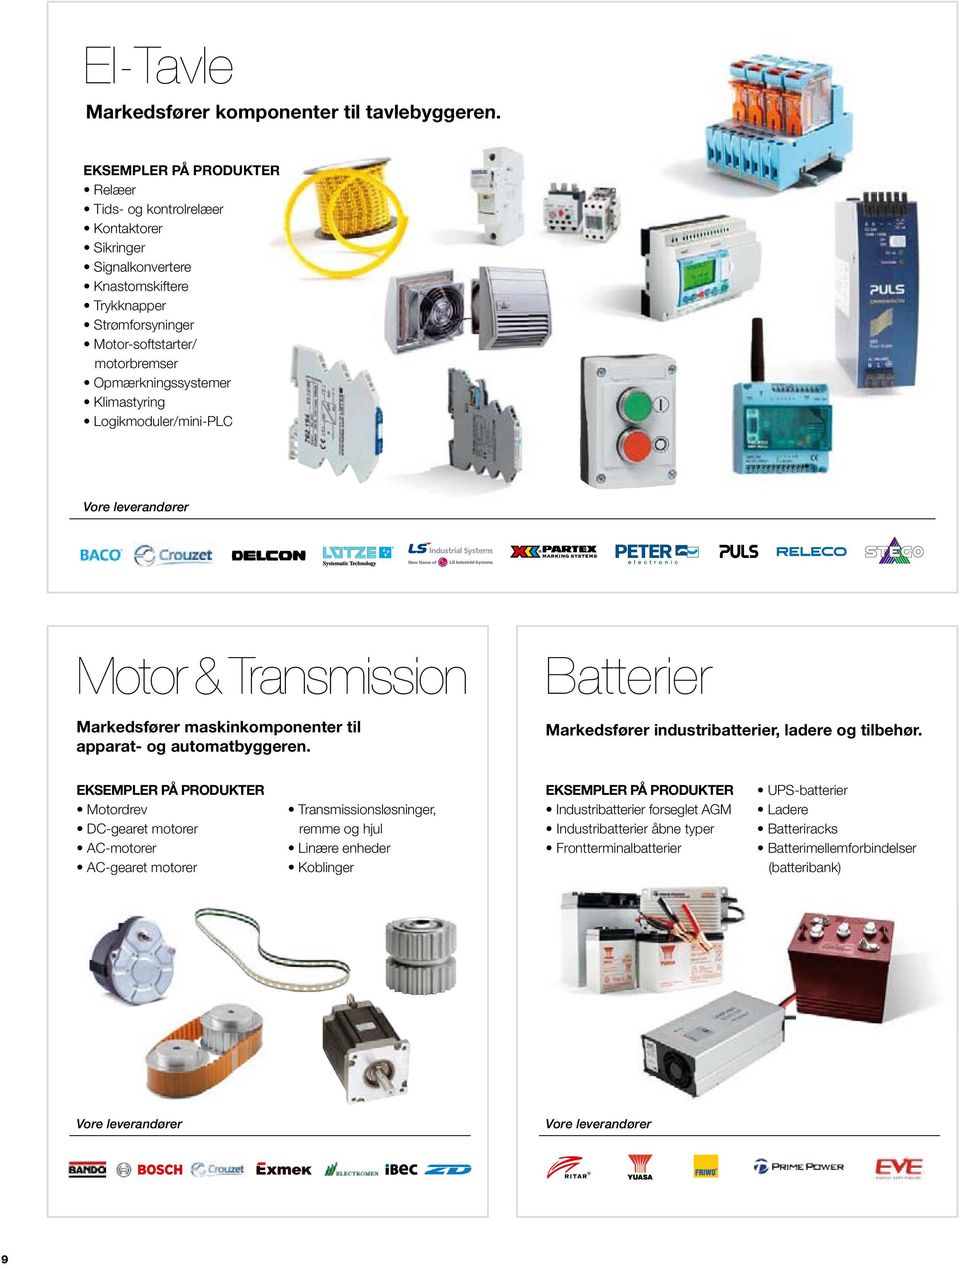 Klimastyring Logikmoduler/mini-PLC Motor & Transmission Markedsfører maskinkomponenter til apparat- og automatbyggeren.